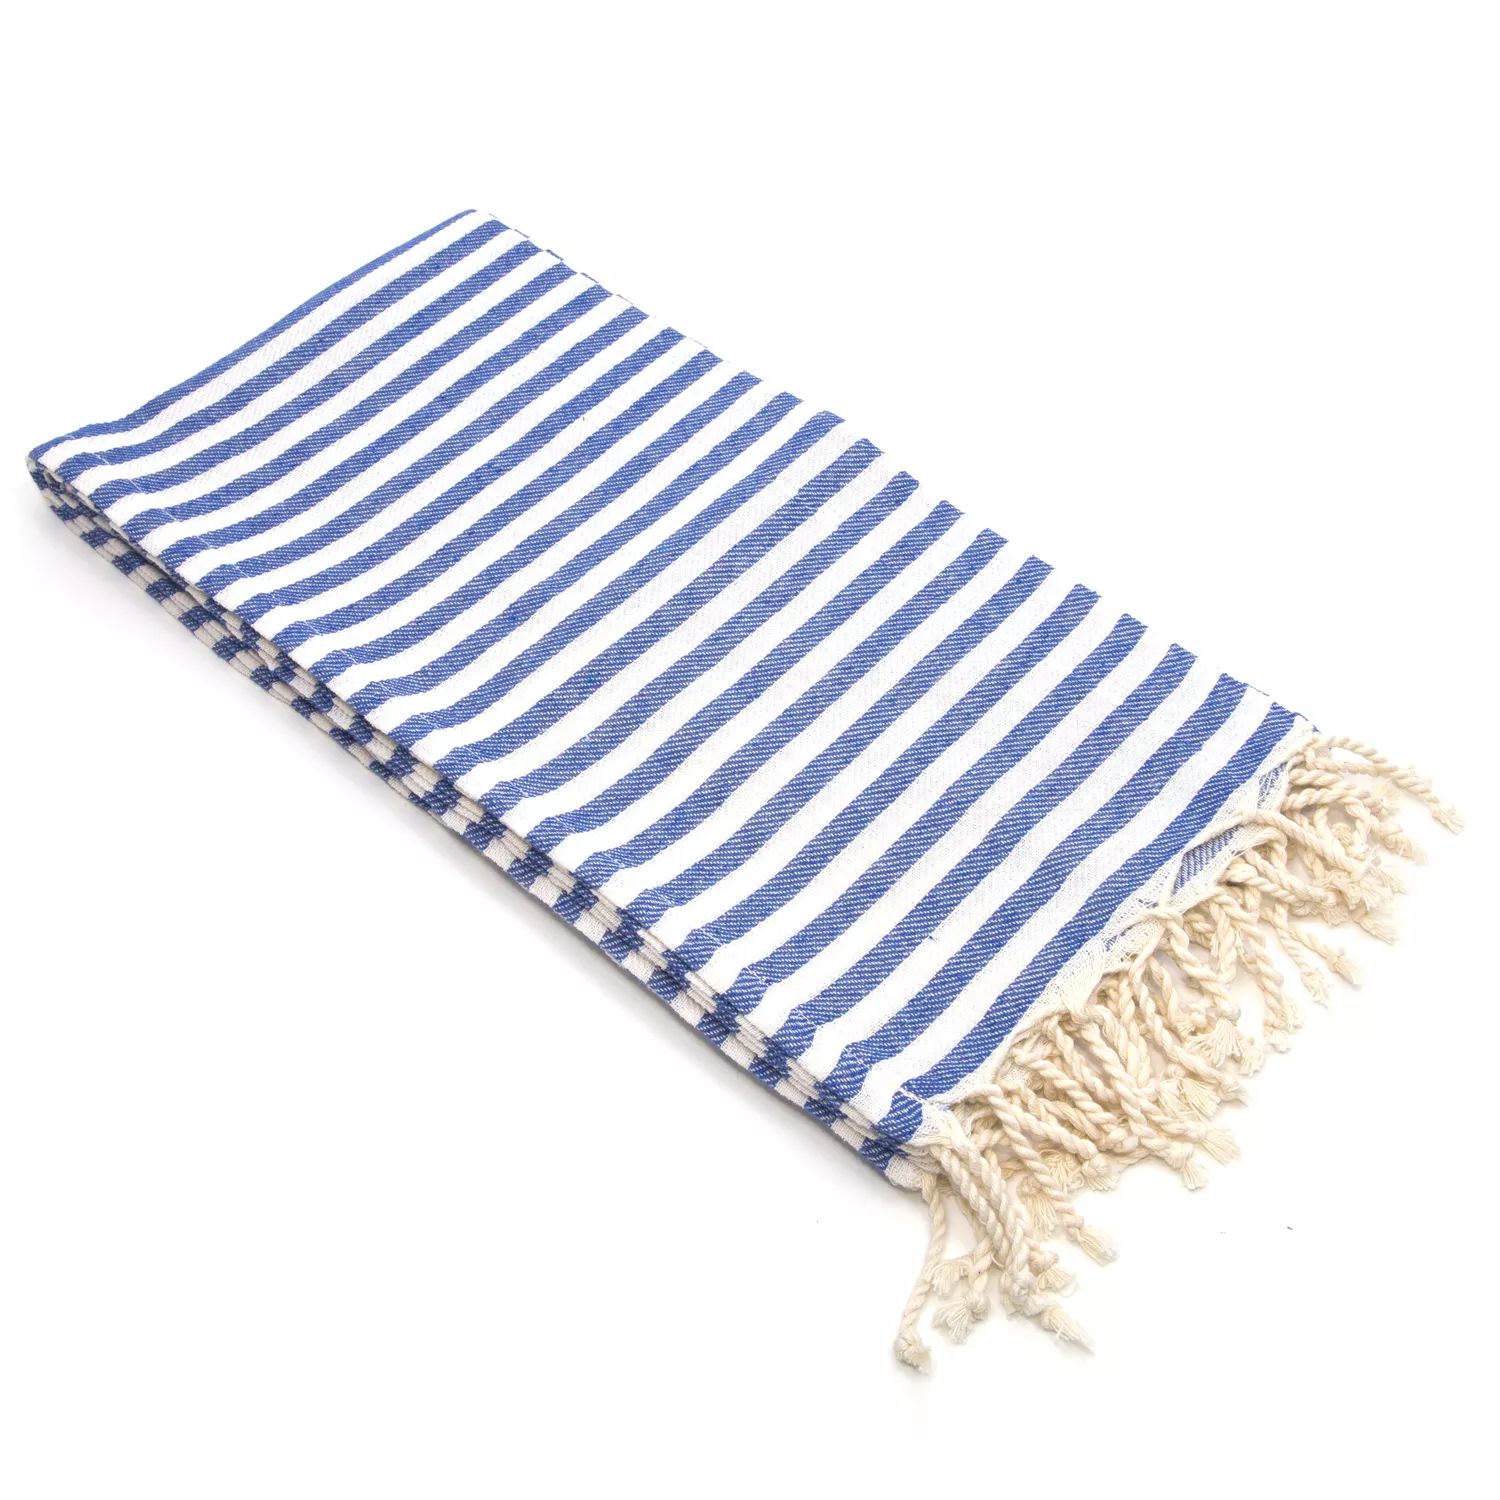 Linum Текстиль для дома Fun in the Sun Пляжное полотенце ocean home set of 4 navy blue striped printed storage bags ocean home